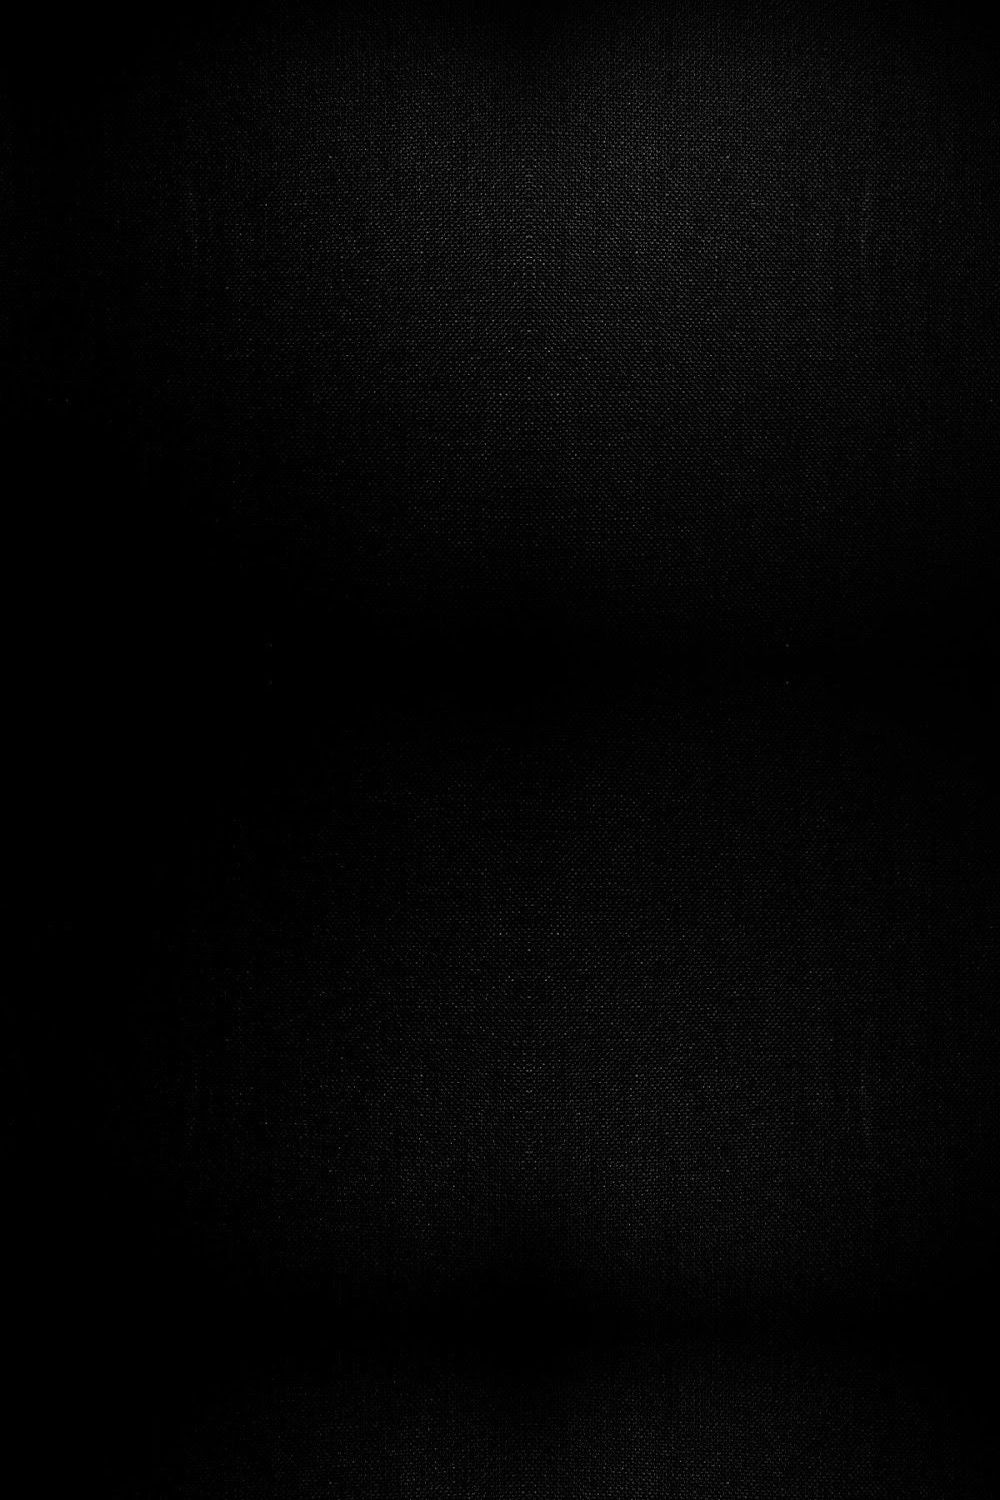 Black Wallpaper HD 4k iPhone Free Download - iPhone Wallpapers